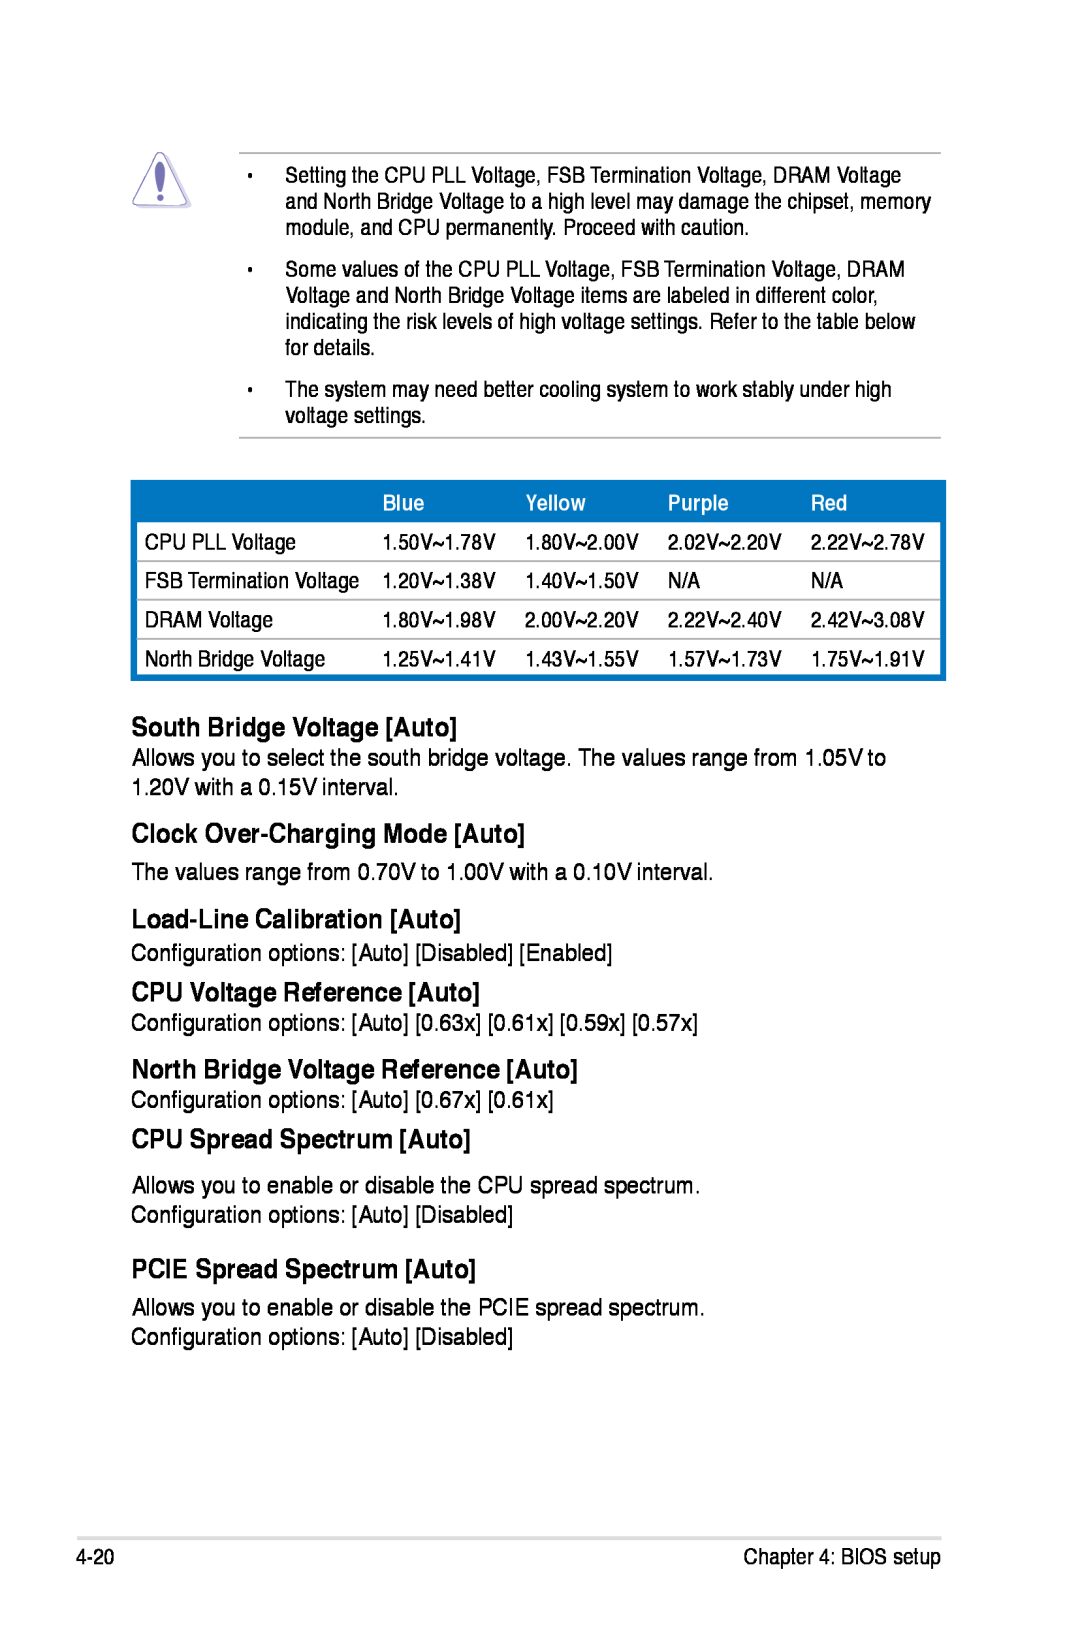 Asus P5K/EPU manual South Bridge Voltage Auto, Clock Over-Charging Mode Auto, Load-Line Calibration Auto 